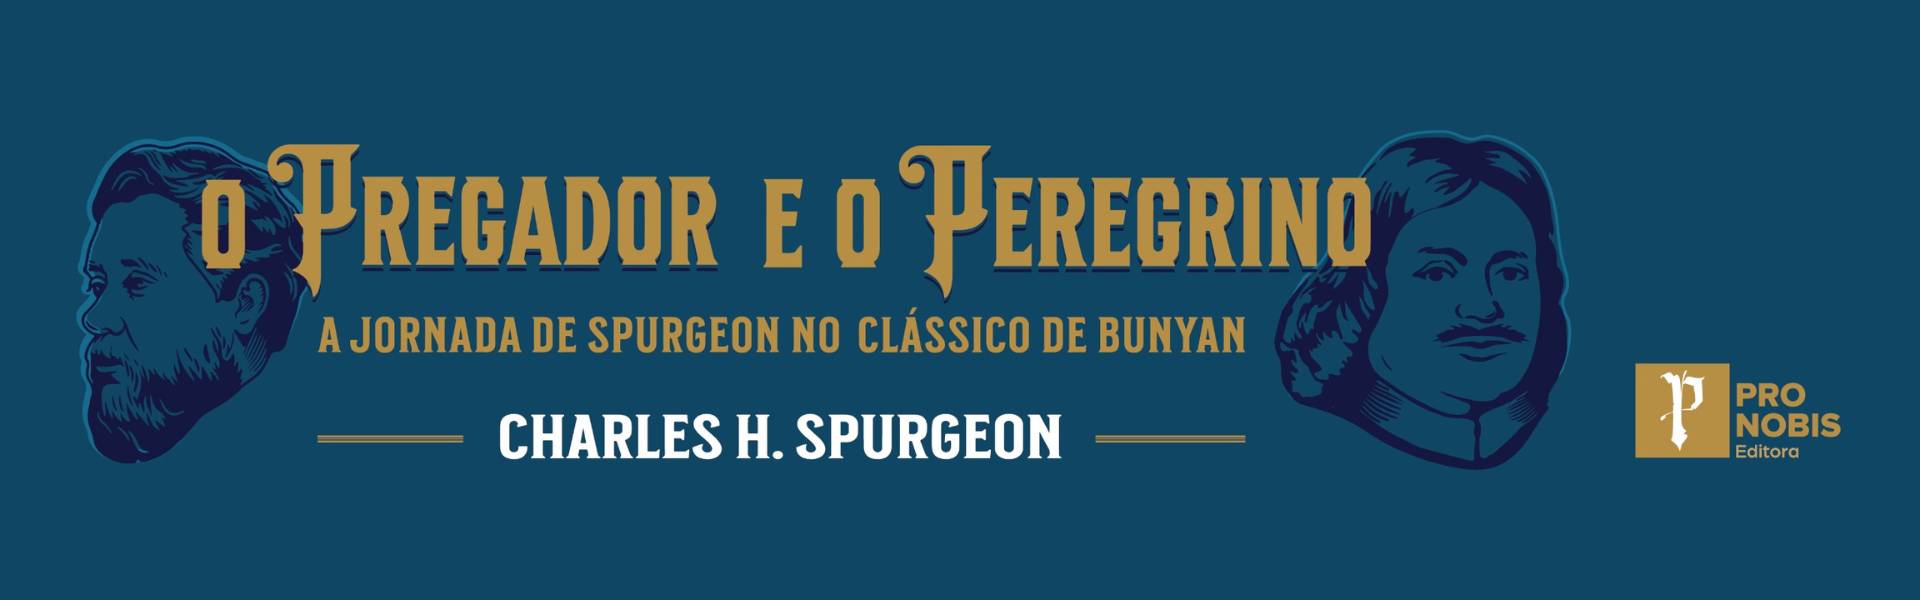 Banner Peregrino